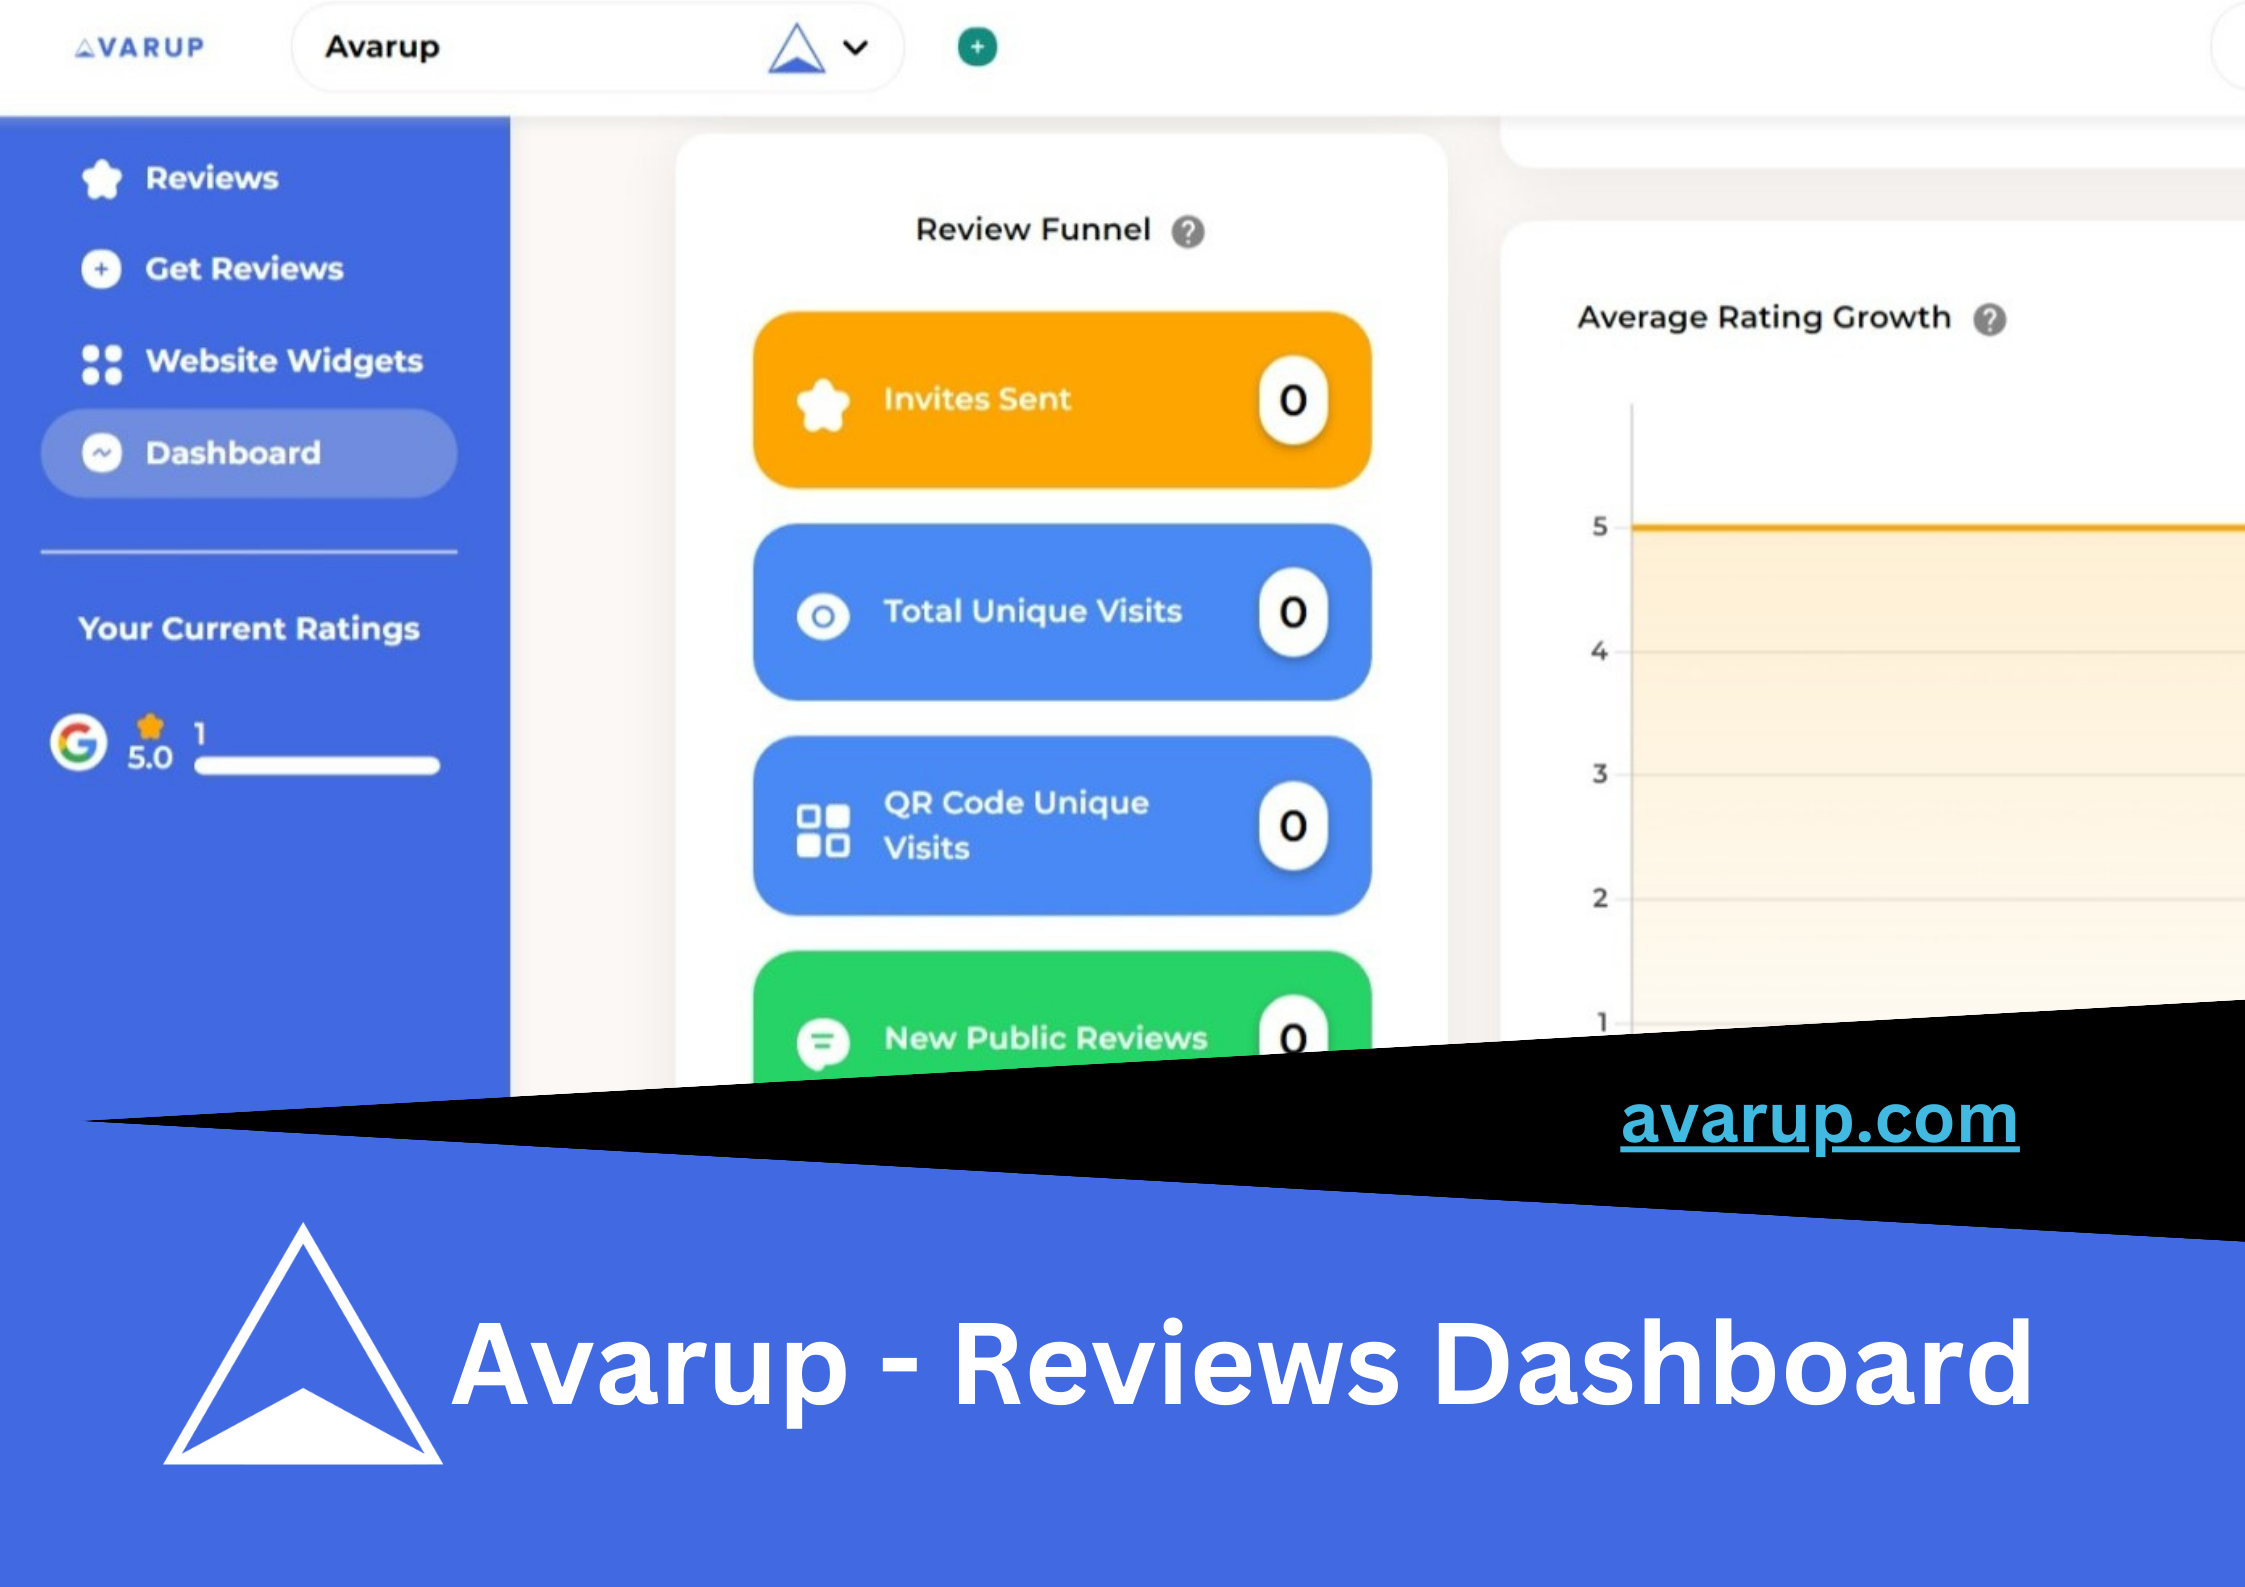 Avarup - Reviews Dashboard